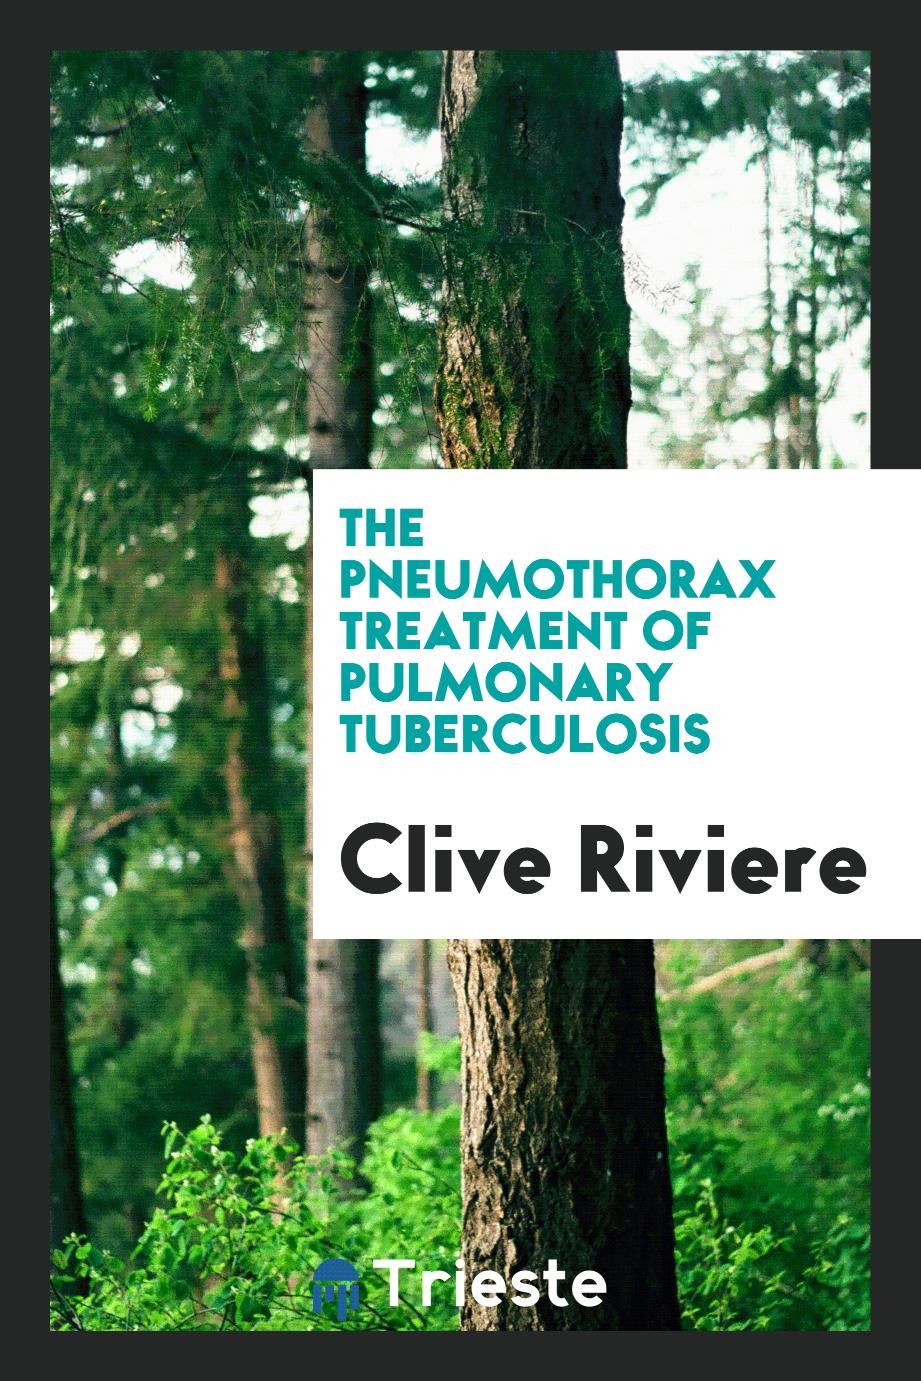 The pneumothorax treatment of pulmonary tuberculosis